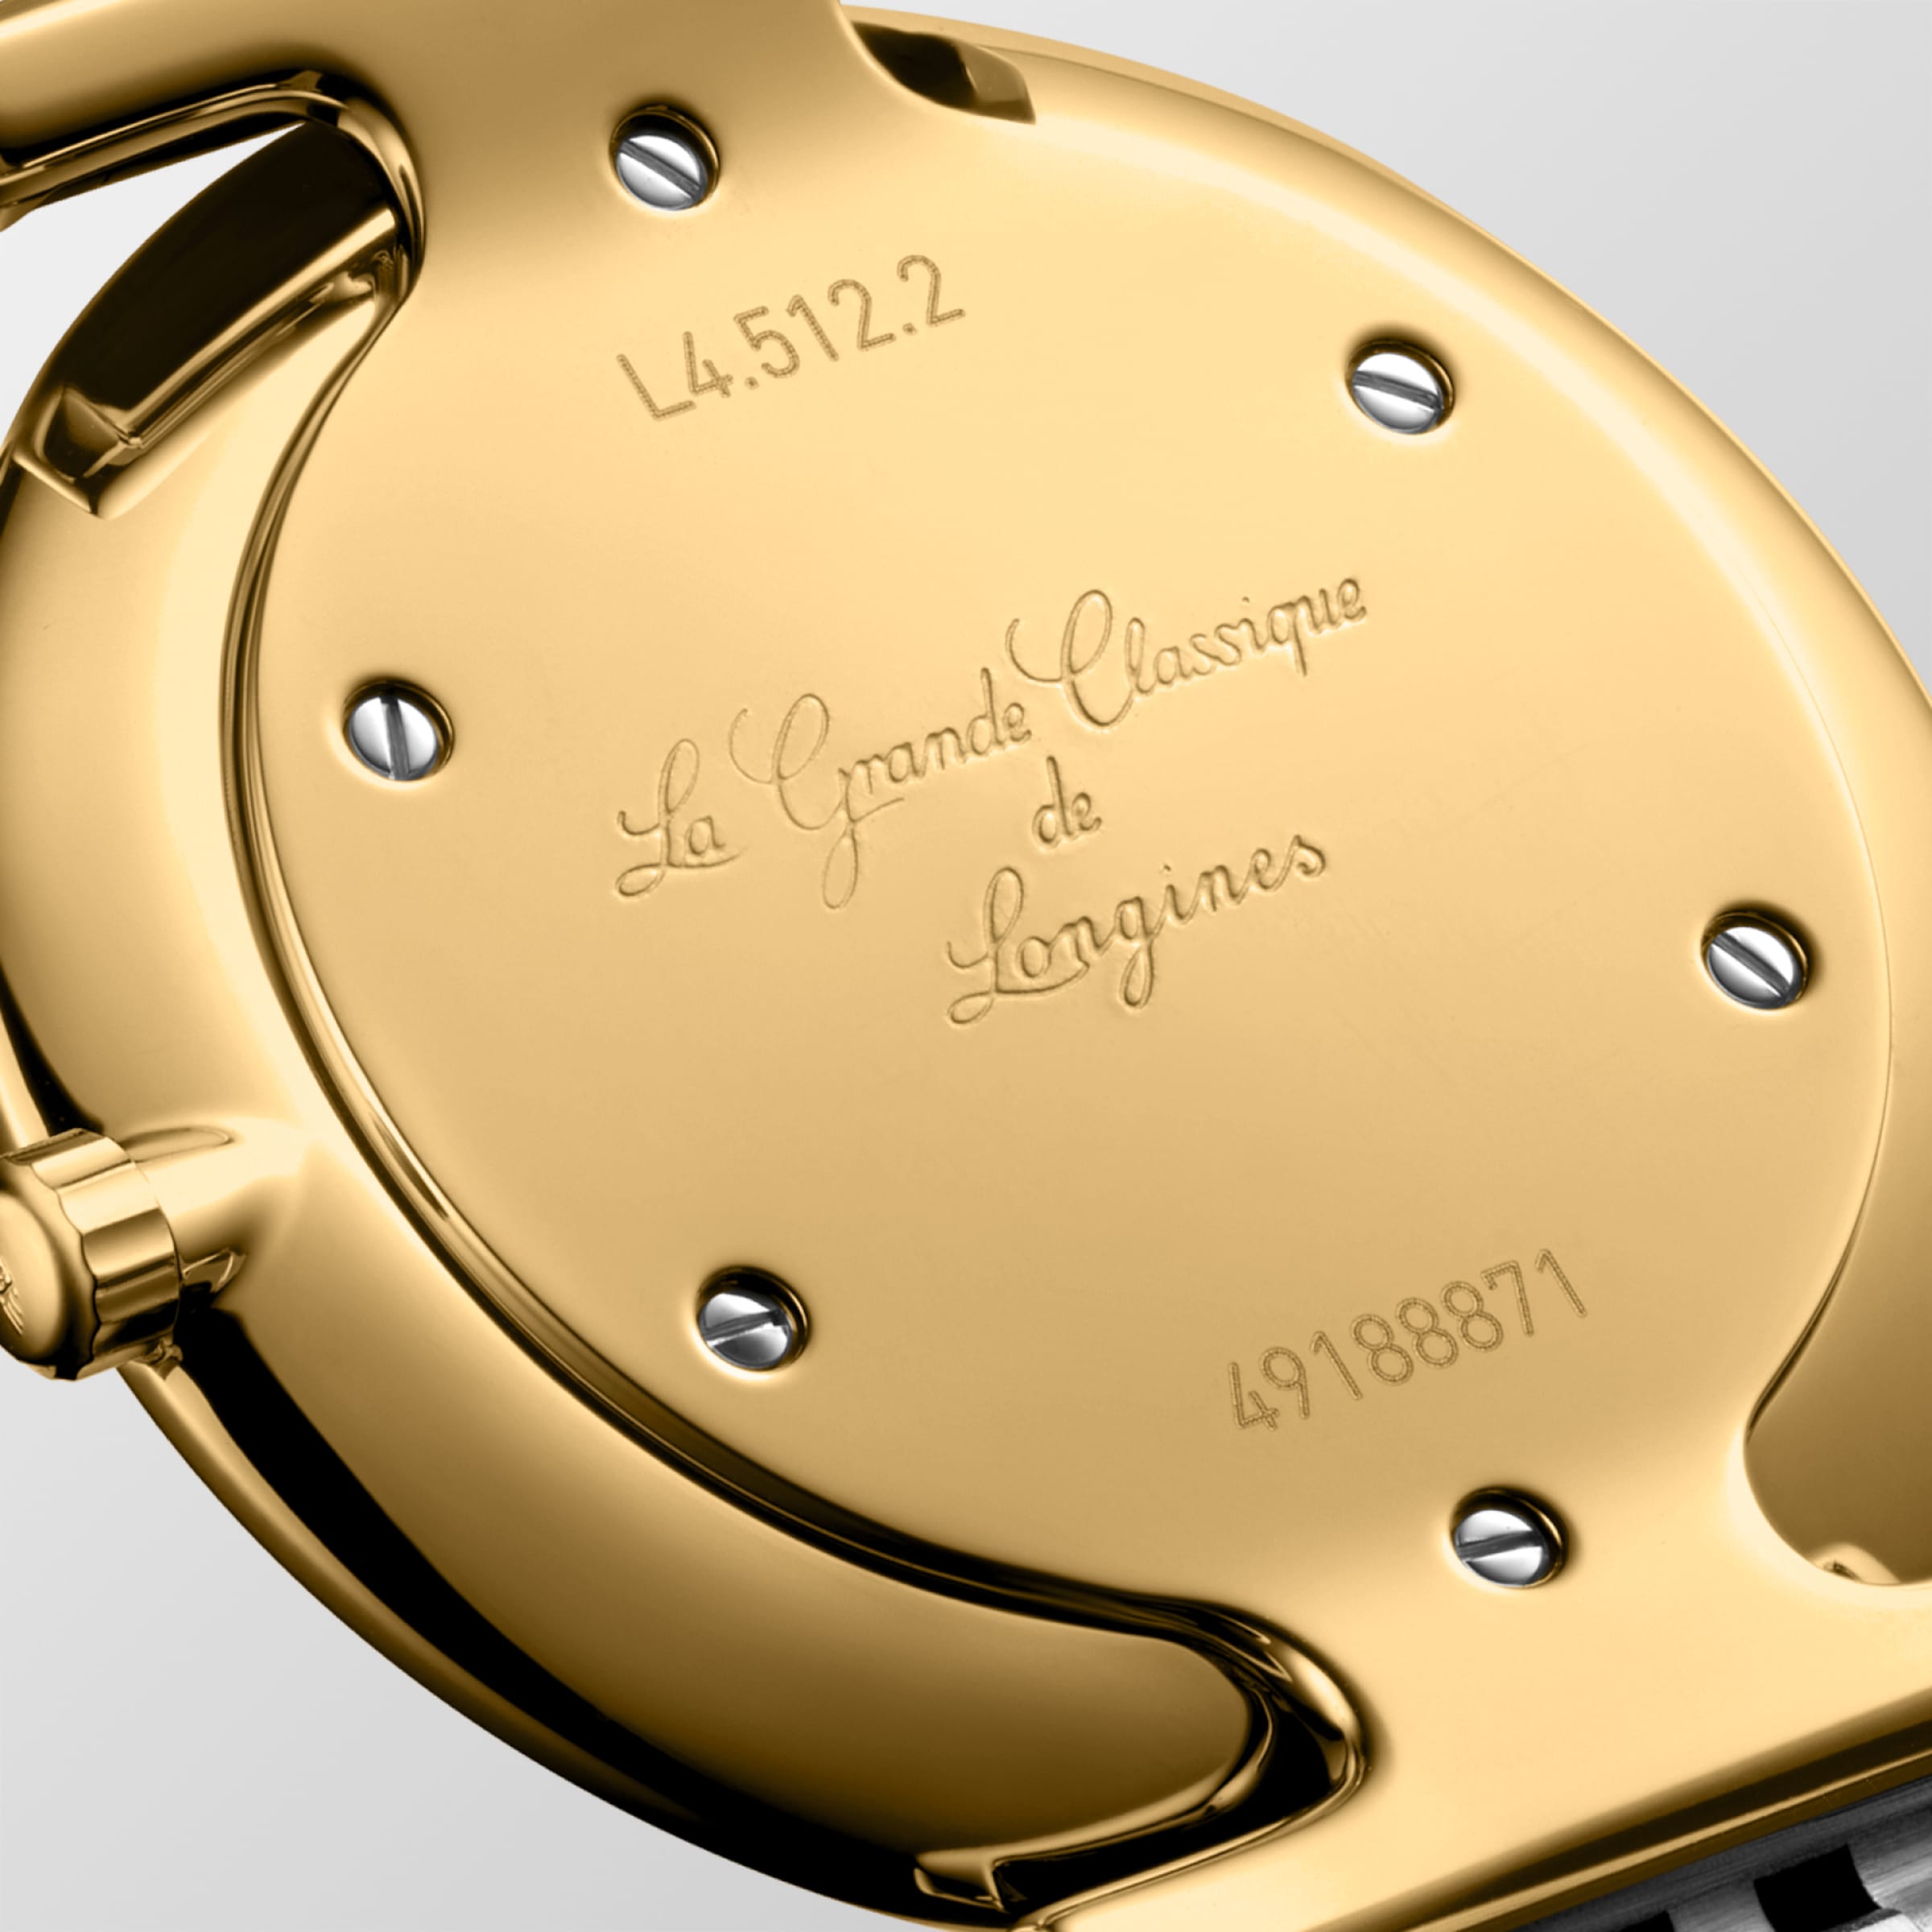 Longines LA GRANDE CLASSIQUE DE LONGINES Quartz Yellow PVD coating Watch - L4.512.2.11.7